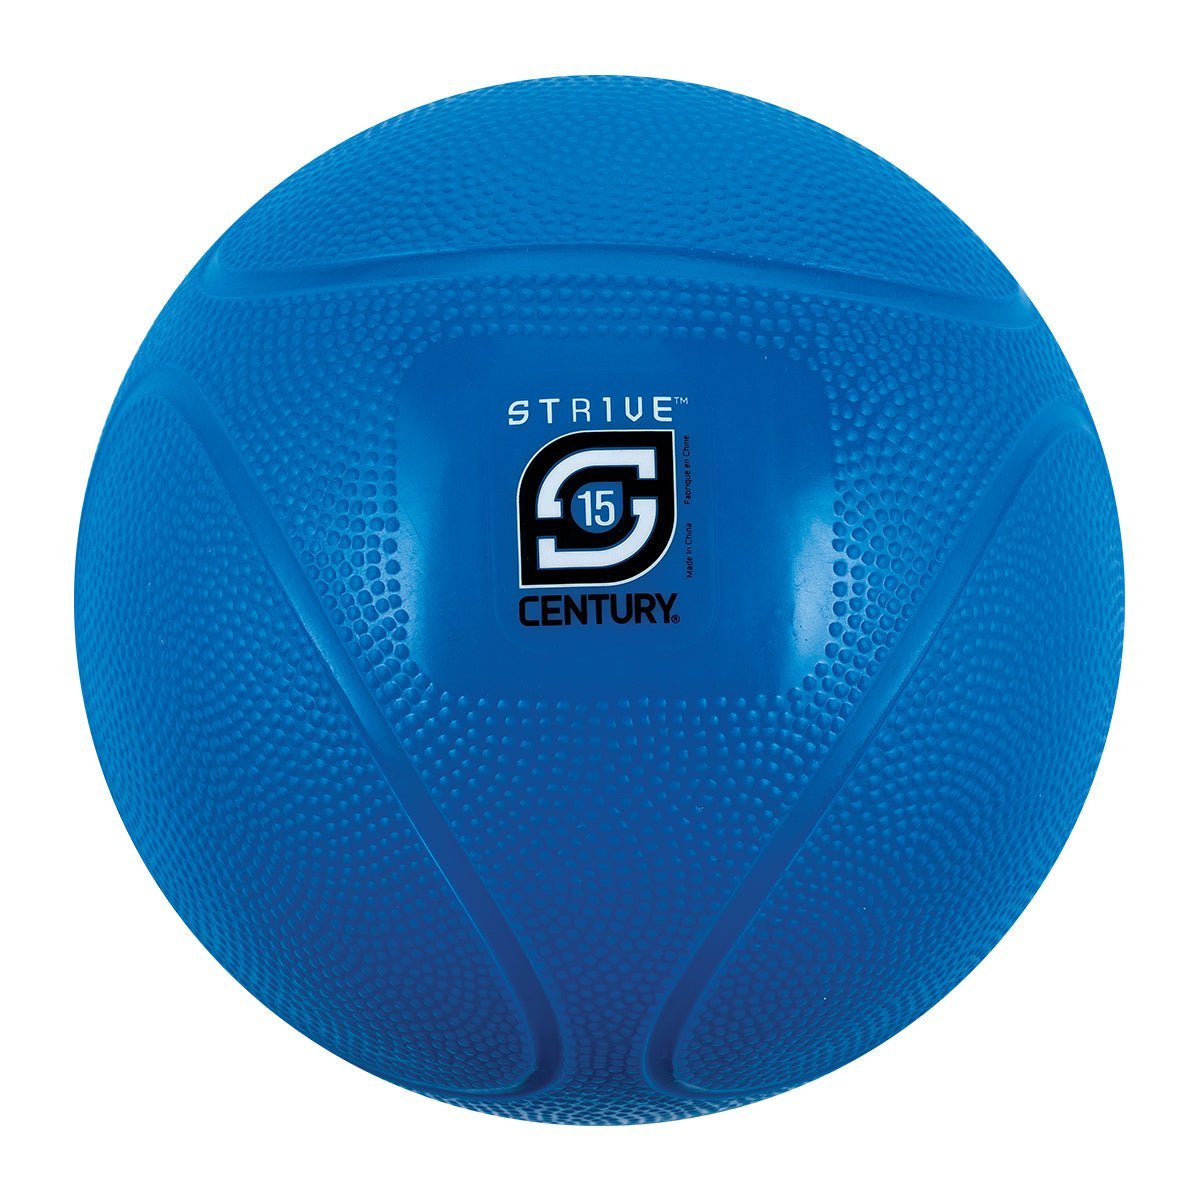 Strive Medicine Ball 15 Lbs Blue